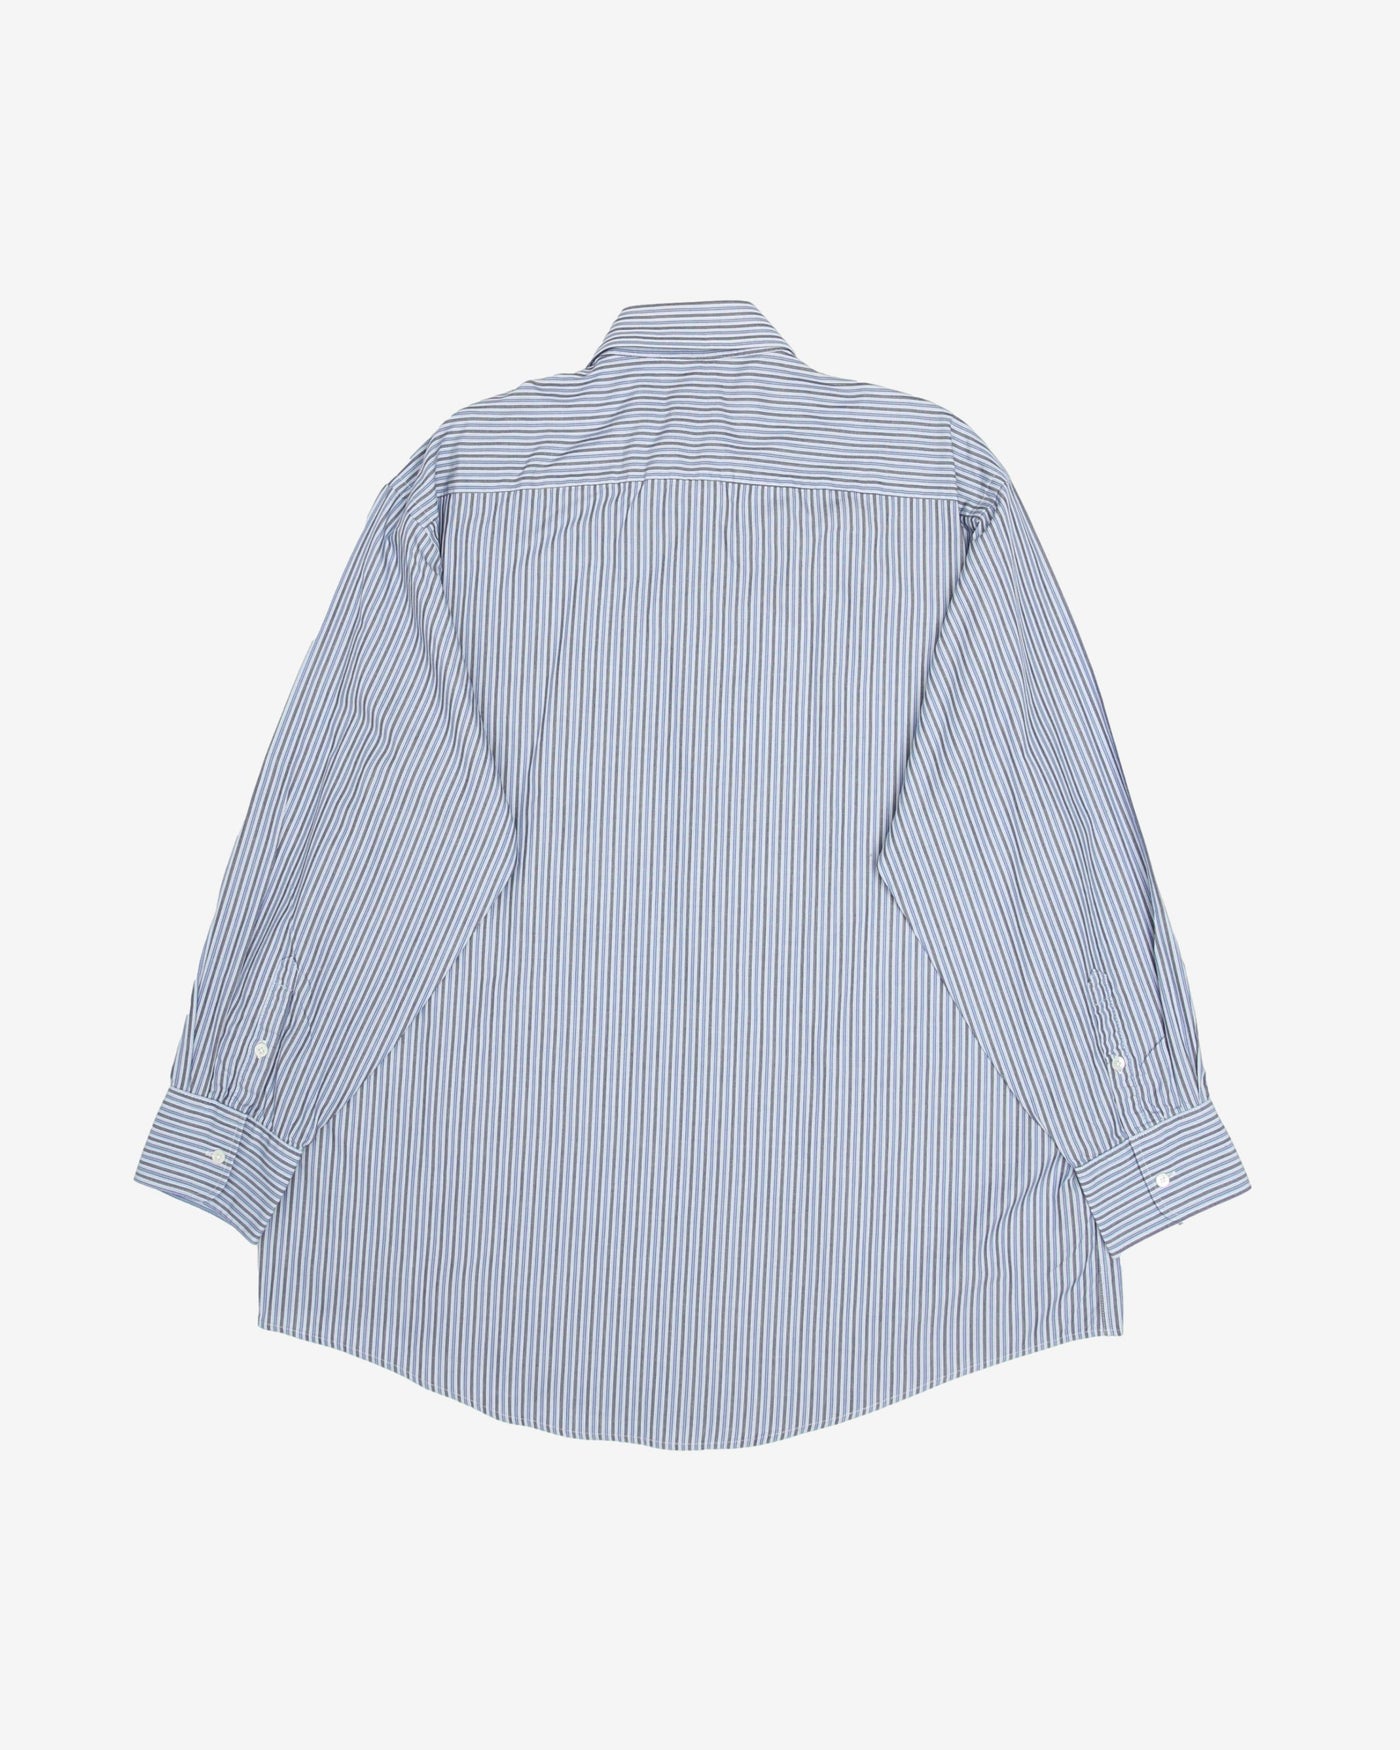 Vintage Giorgio Armani Striped Long-Sleeve Button Up Shirt - XL